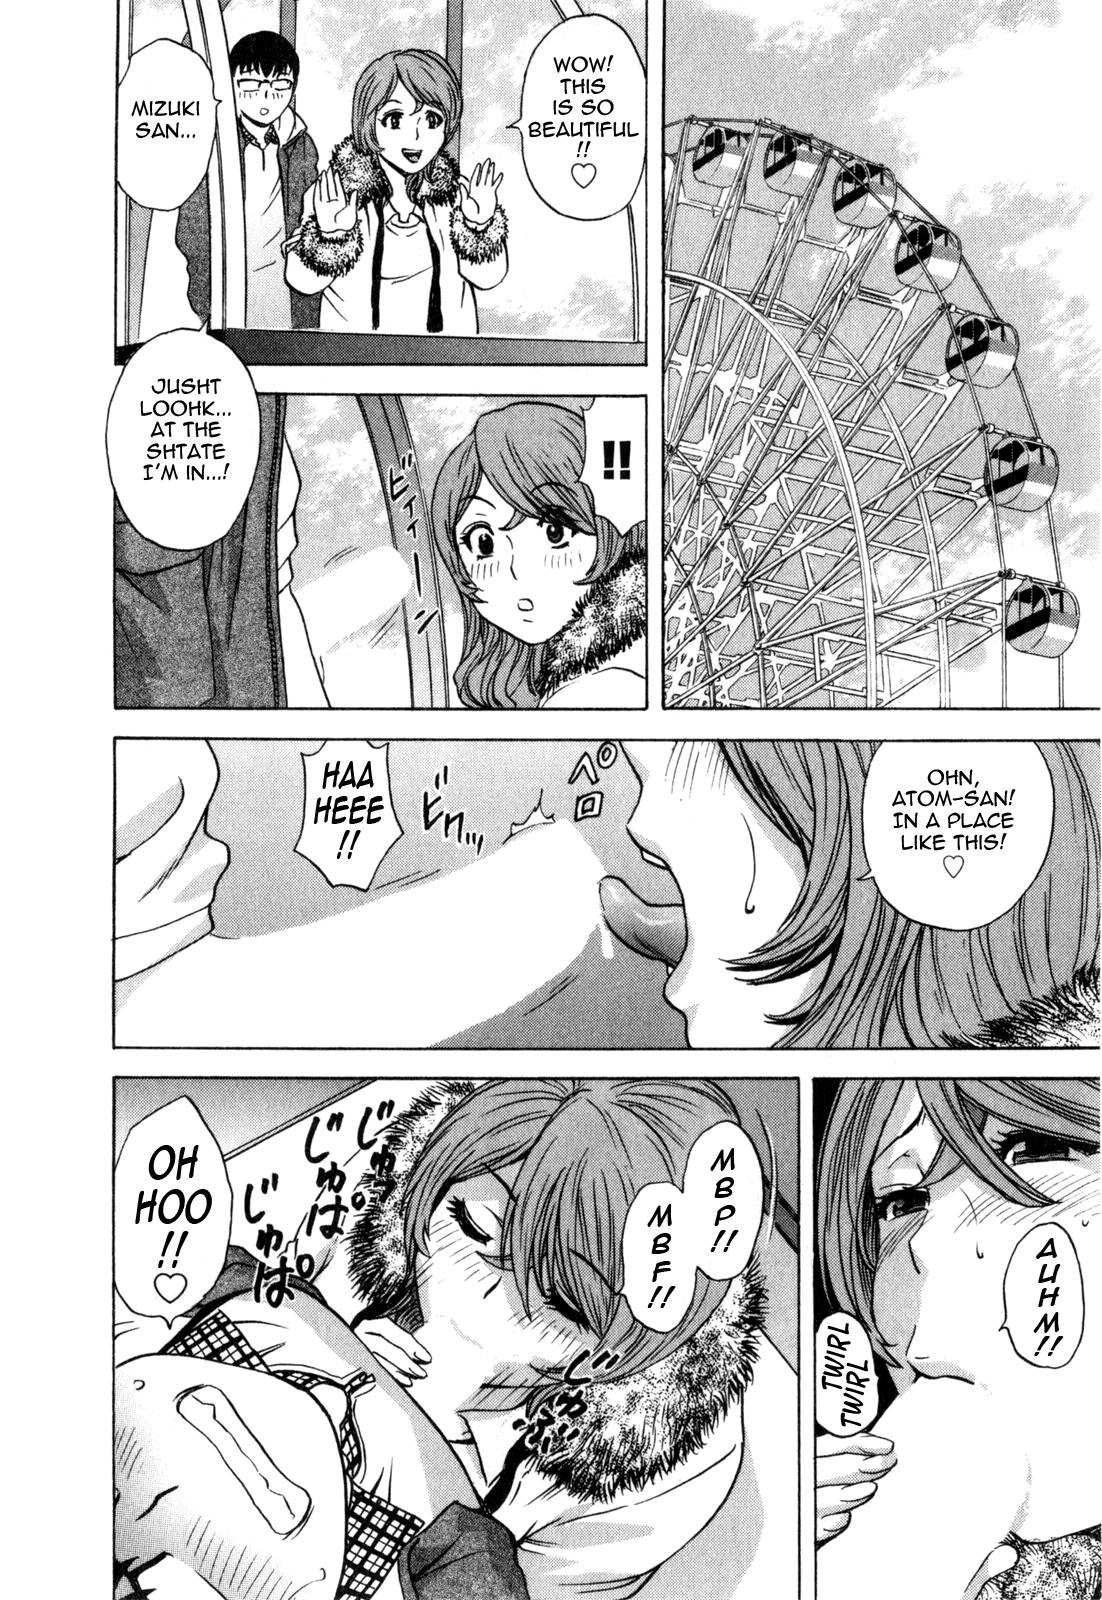 [Hidemaru] Life with Married Women Just Like a Manga 3 - Ch. 1-2 [English] {Tadanohito} 34